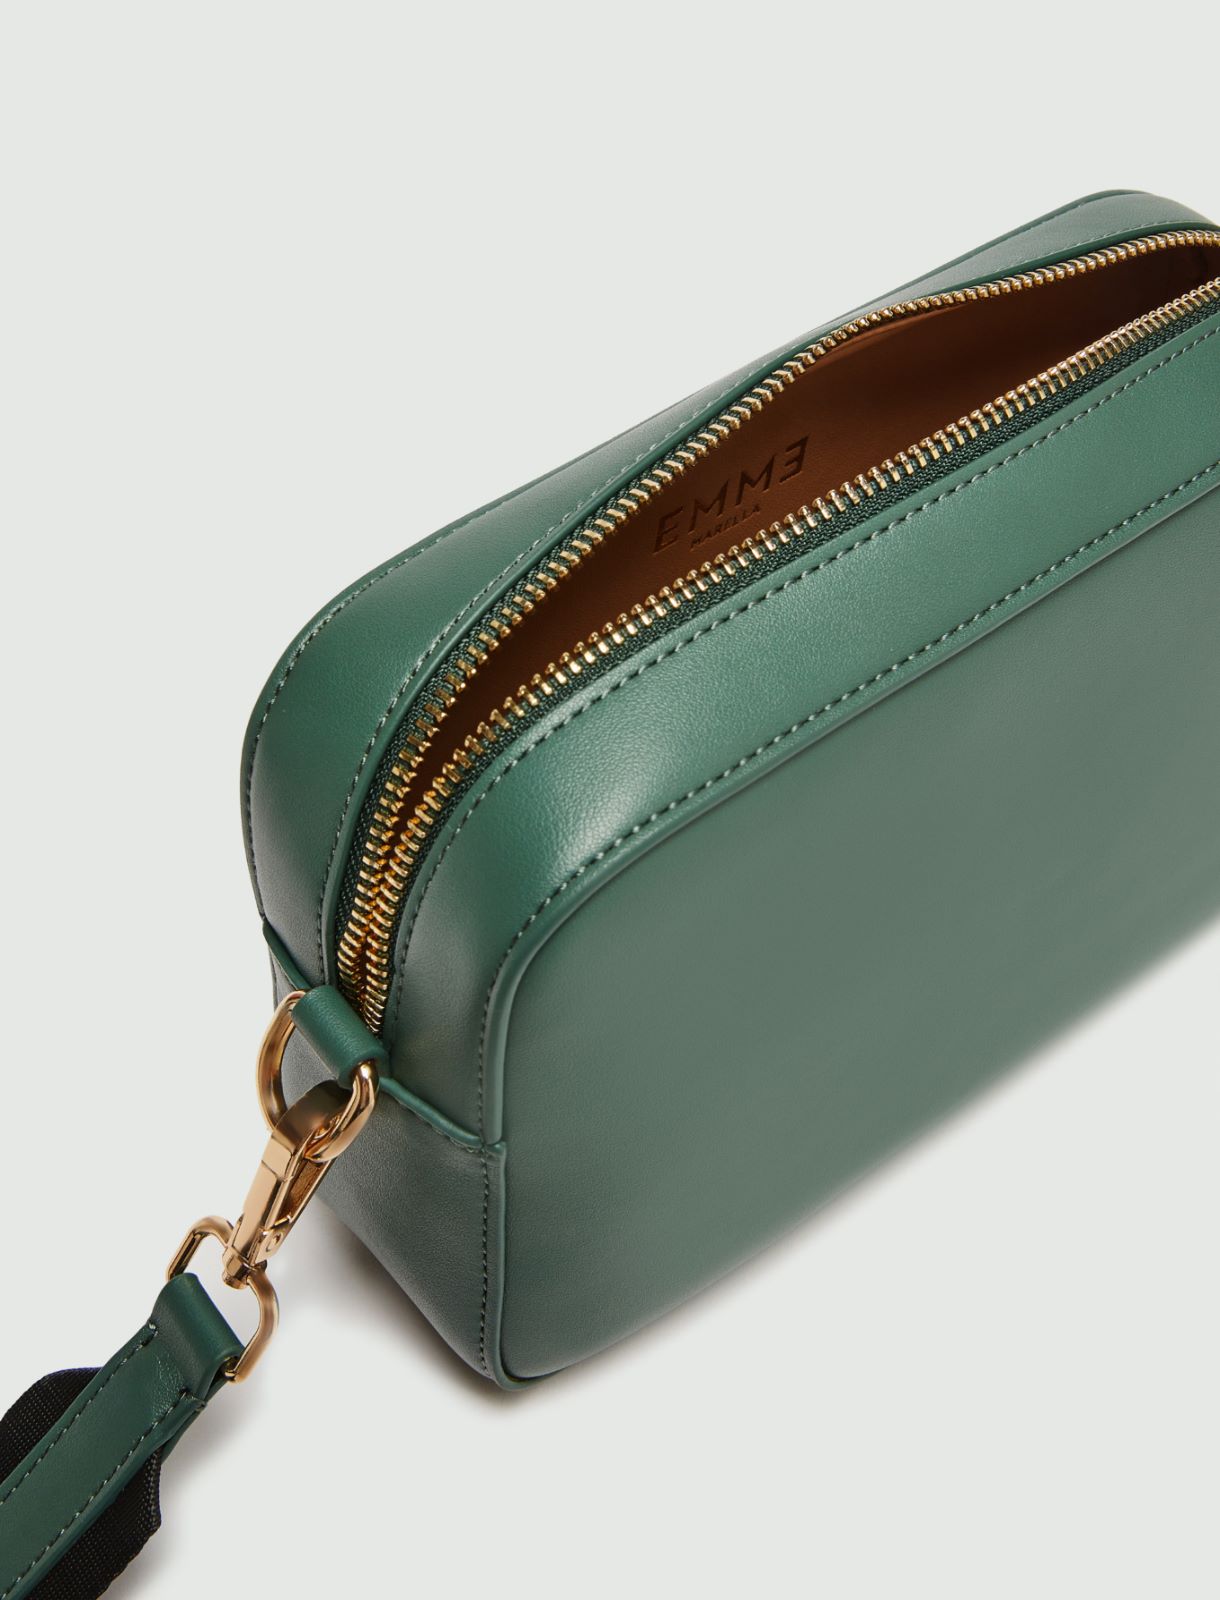 Anca Barbu slogan handbags www.BARBU.com 💕say what's on your mind but on  your bag! 💕 #ancabarbu #designer #handbag #designerbag… | Instagram